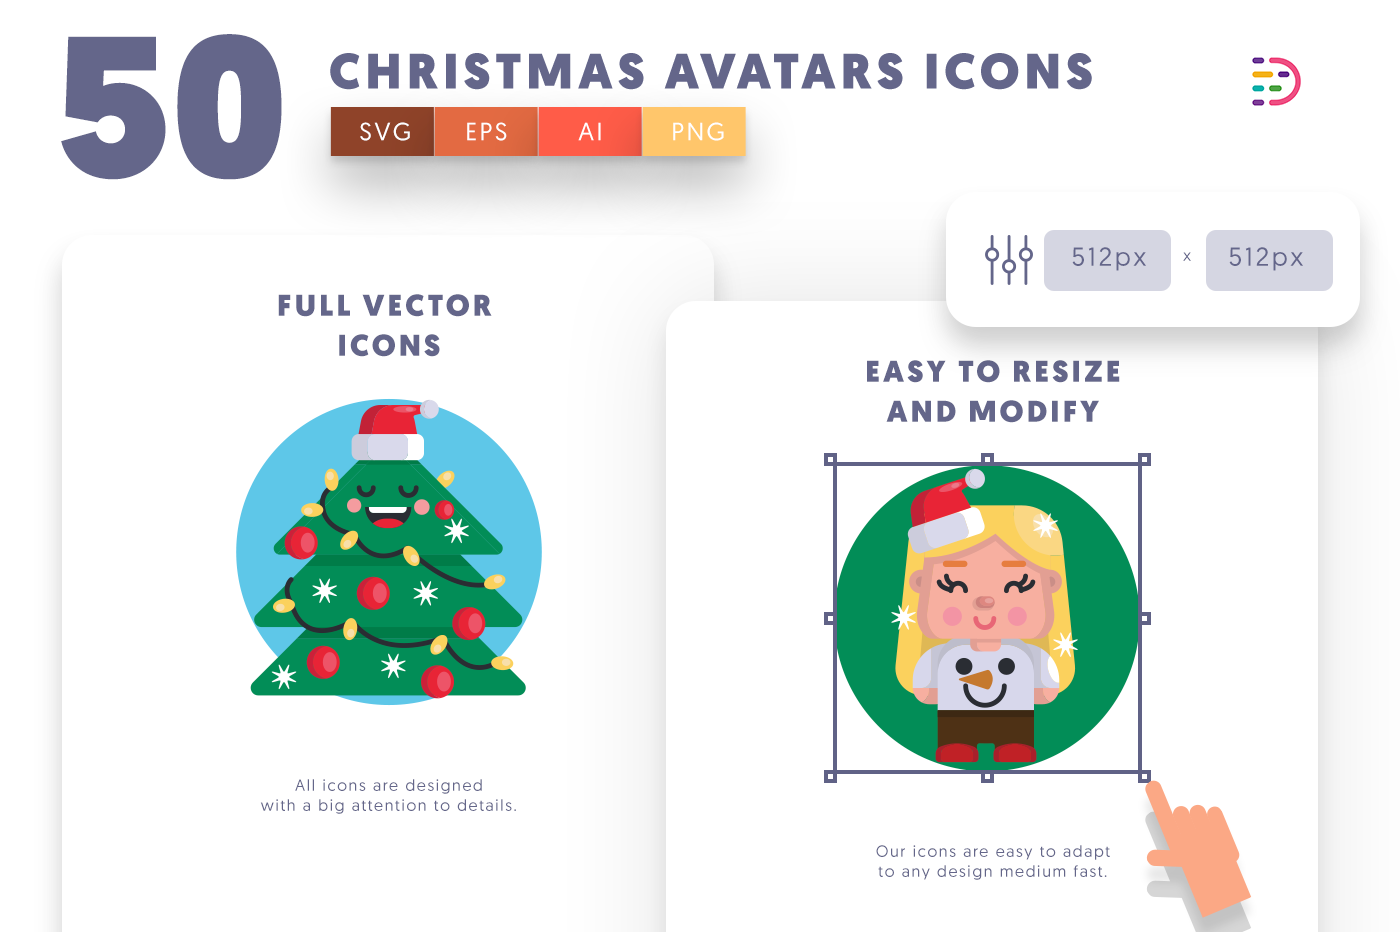 Full vector Christmas Avatars Icons